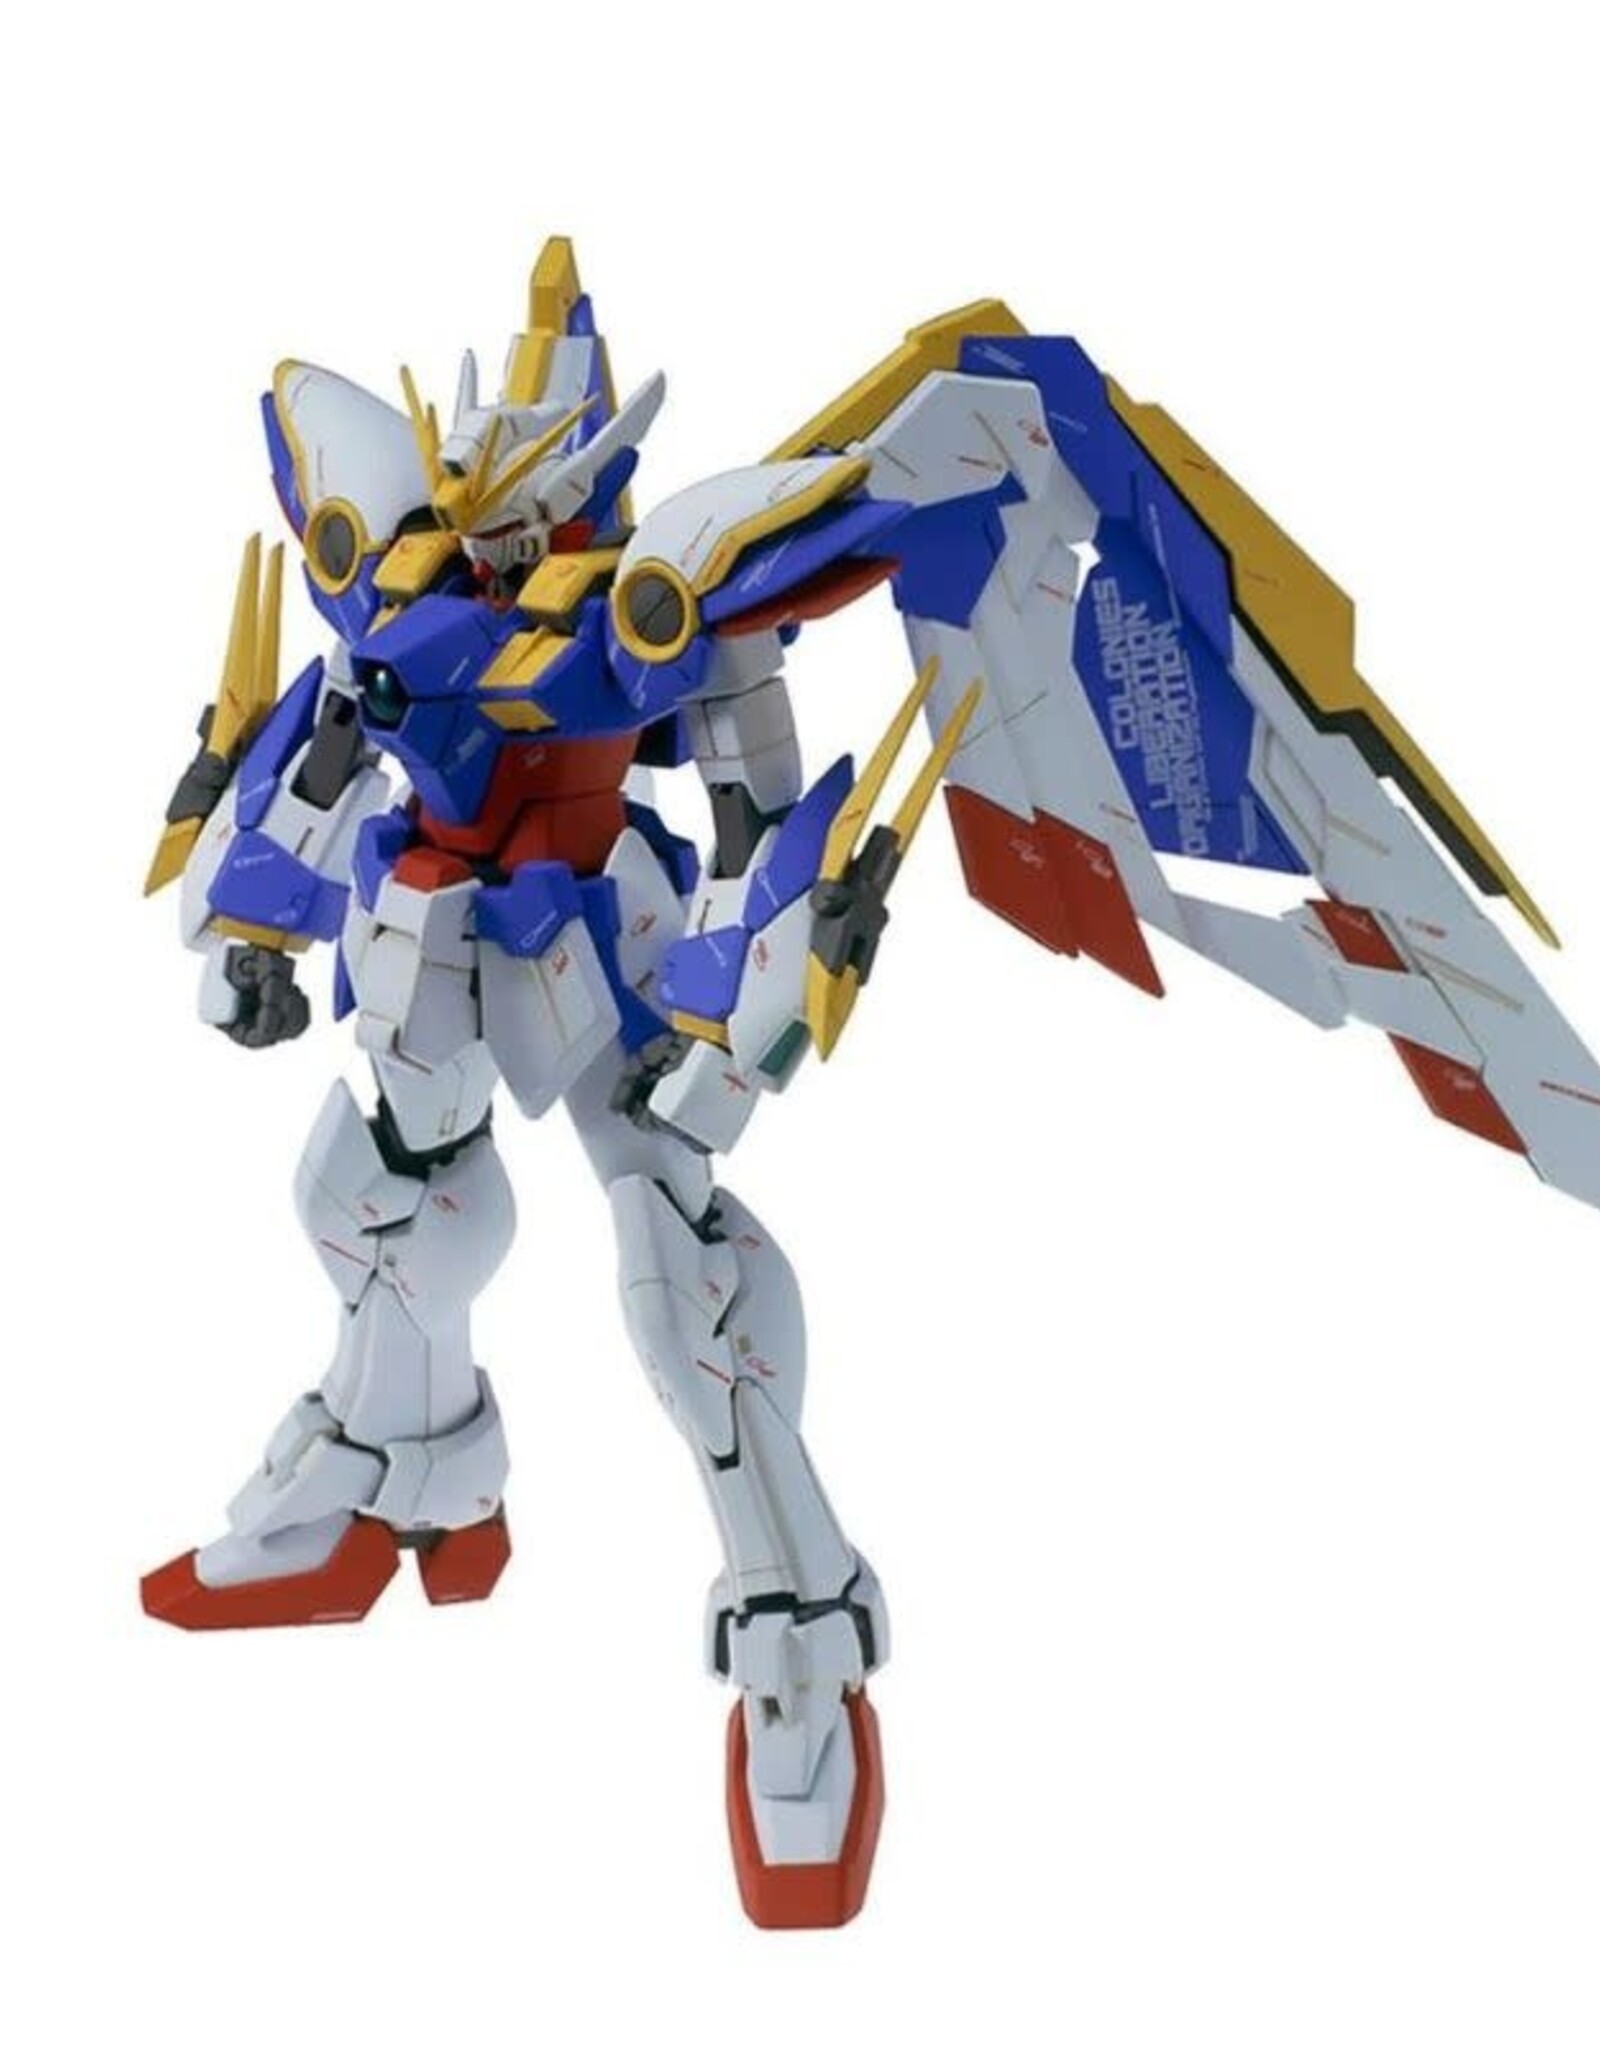 MS XXXG-01W Wing Gundam Ver.Ka. MG